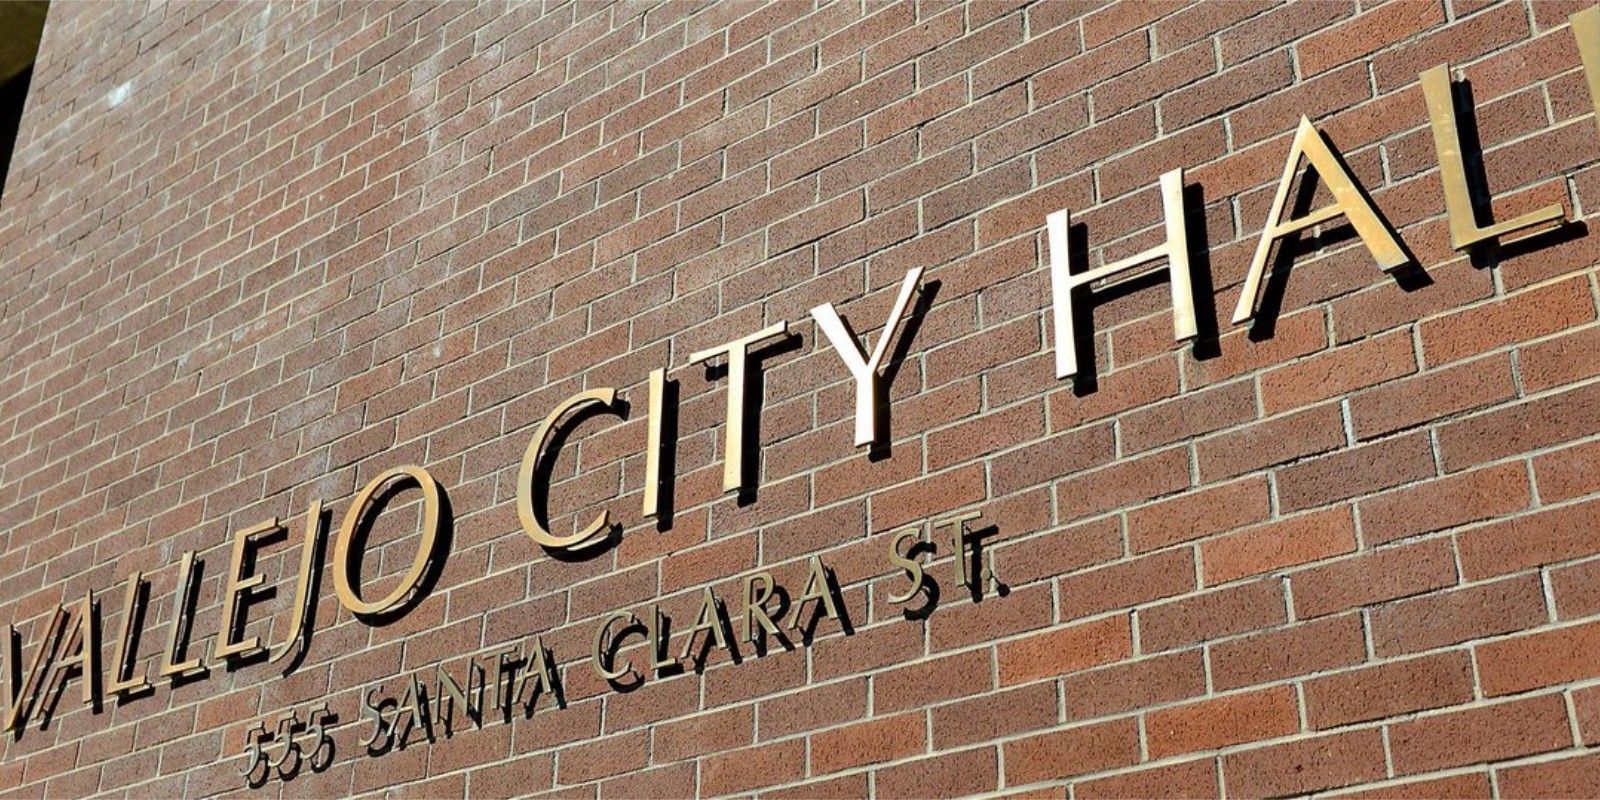 Vallejo City Hall sign